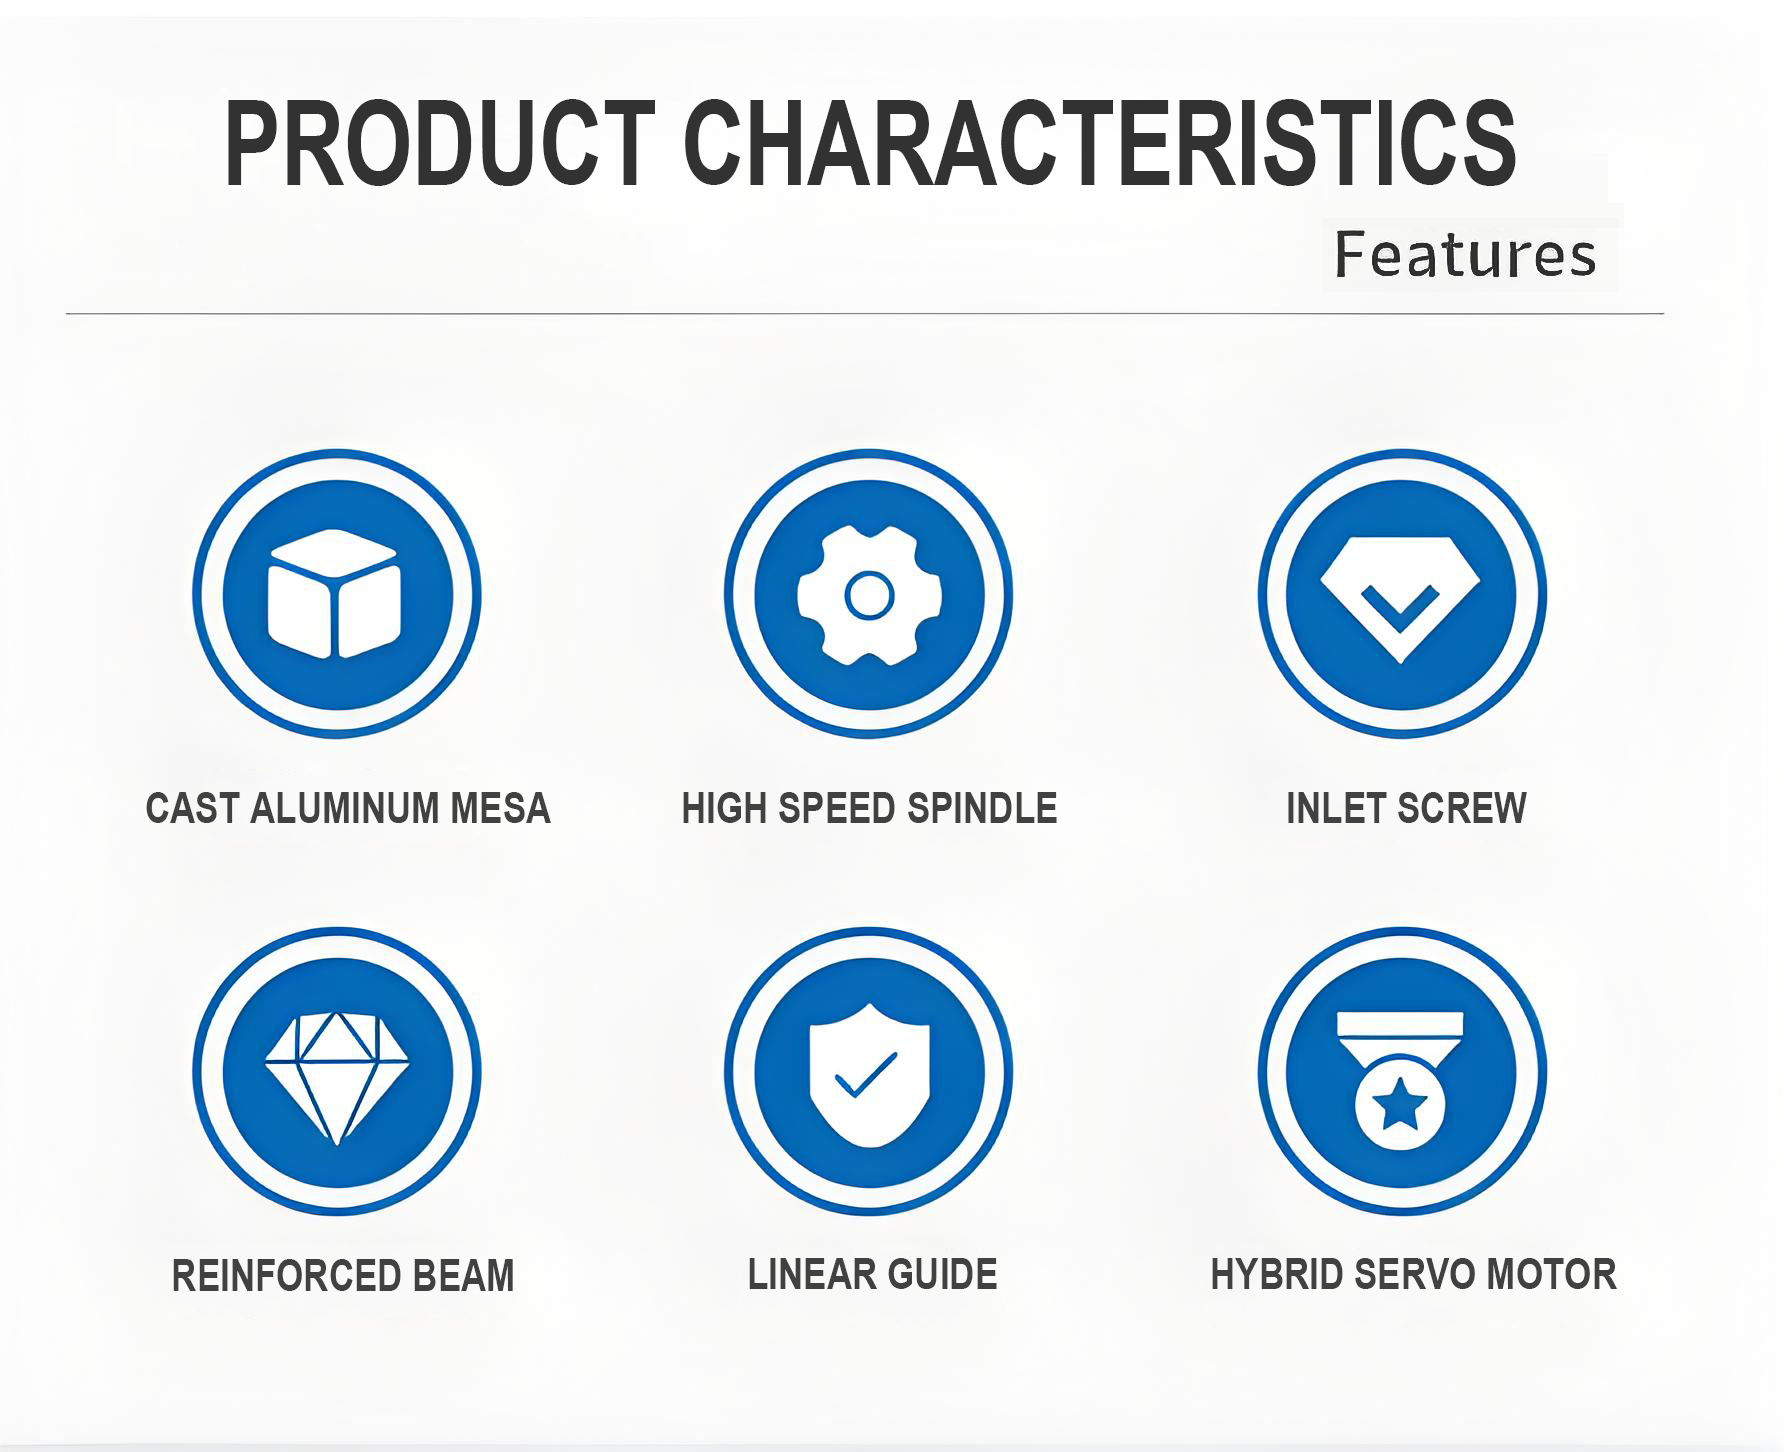 Product characteristics